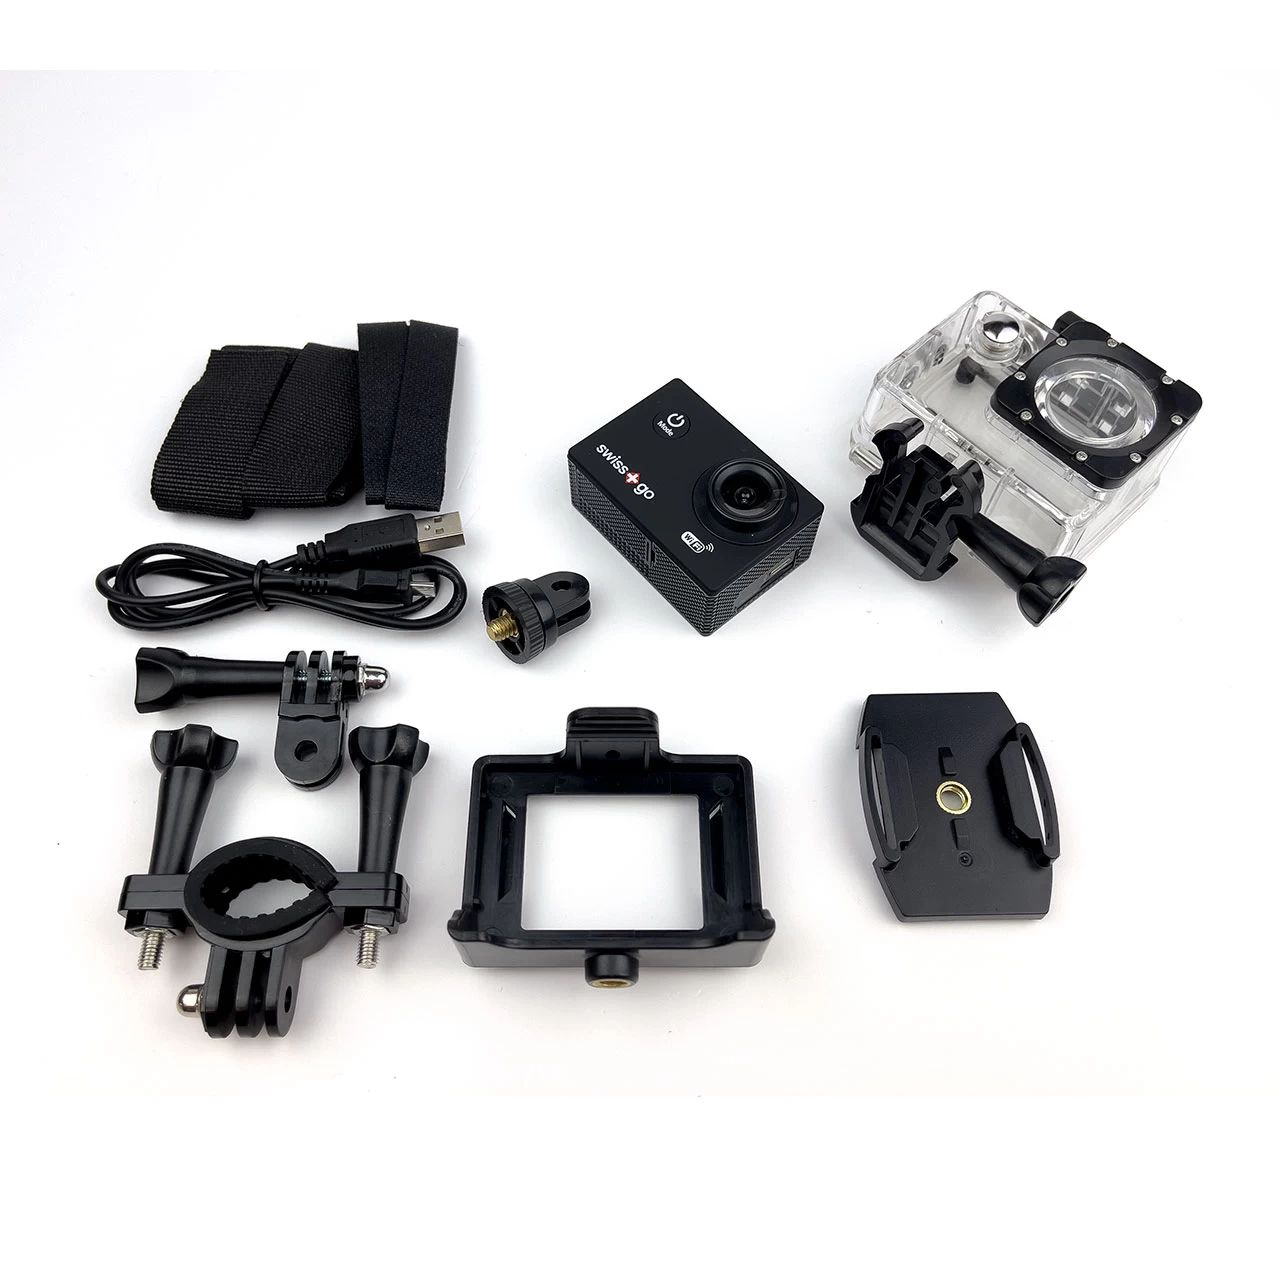 SWI400033 - Sportcam SWISS GO Alpha LCD 2.0 LPTS 120 FHD 1080p mSD WiFi Sumergible 30m Accesorios Negra (SWI400033)